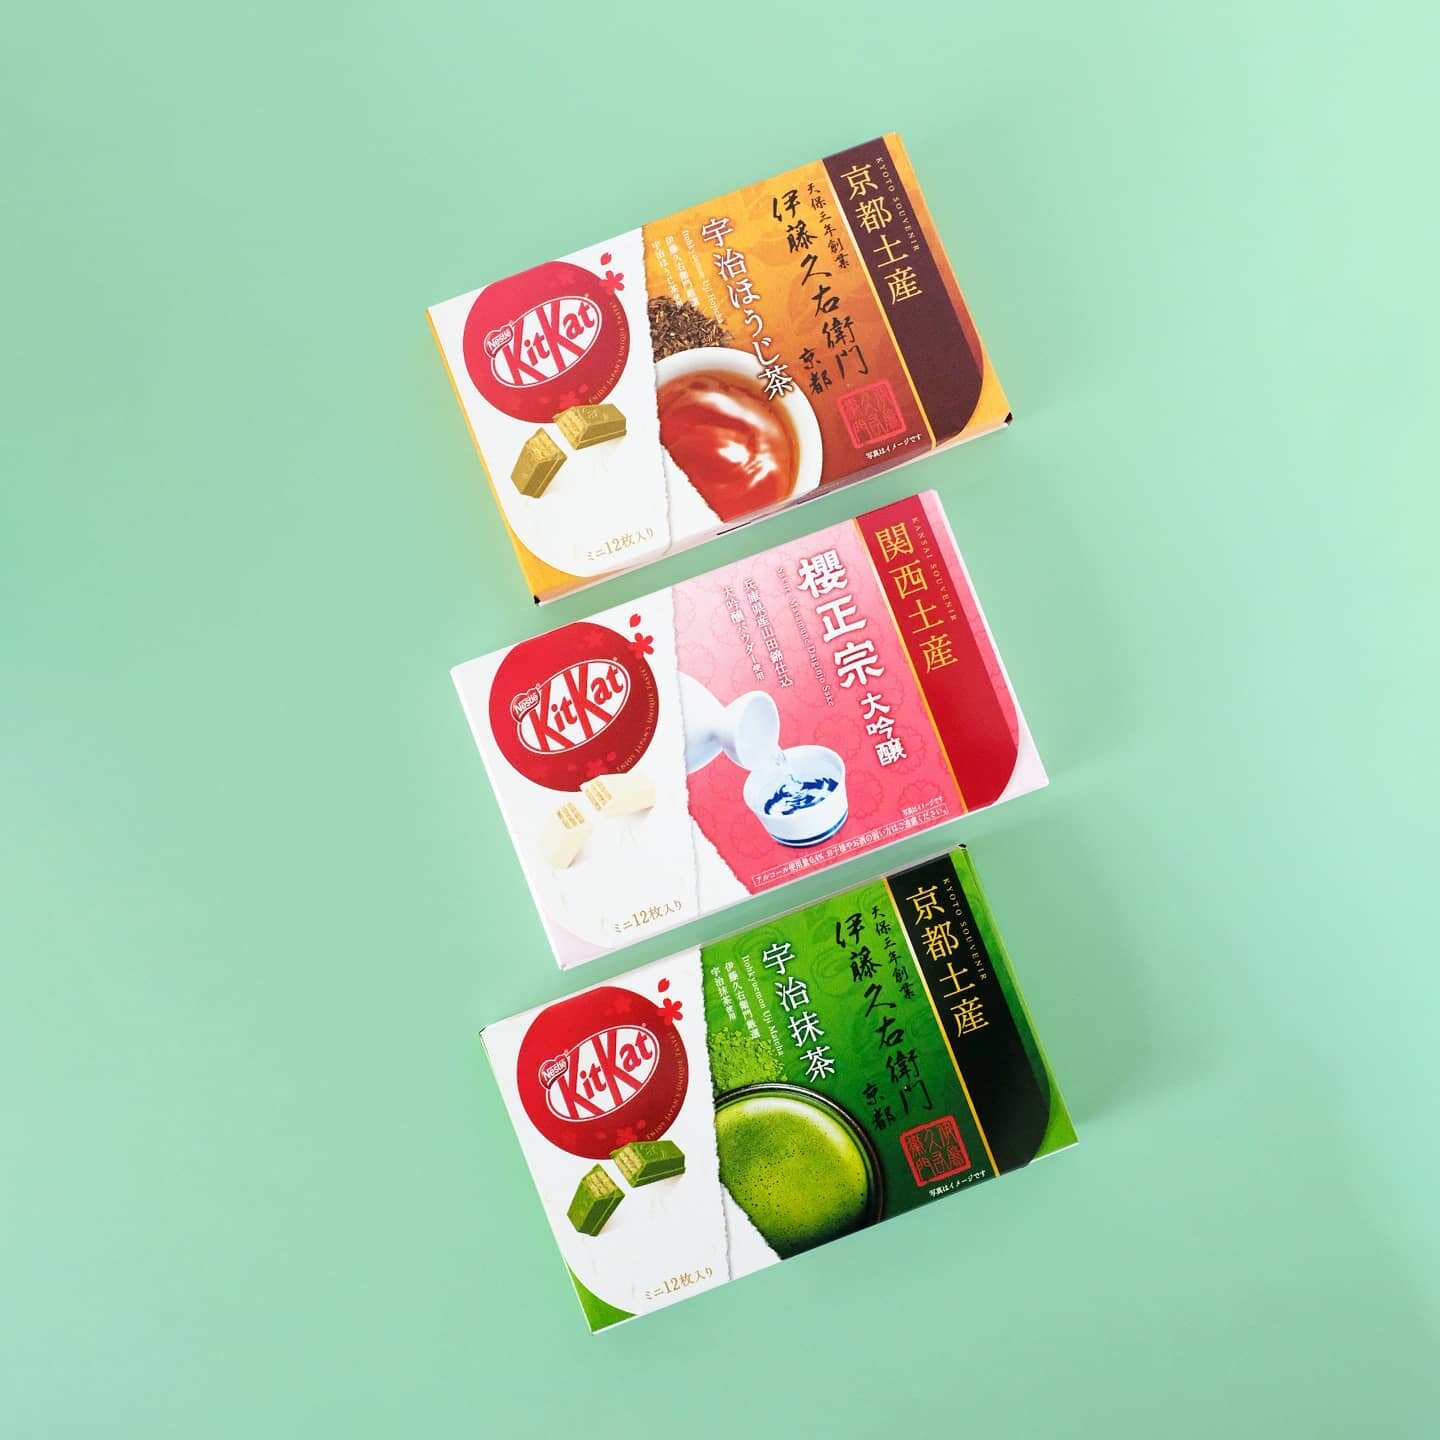 Kit Kat Uji Hojicha, Sake and Uji Matcha flavours now available at Rice World Supermarket 🍵🍶